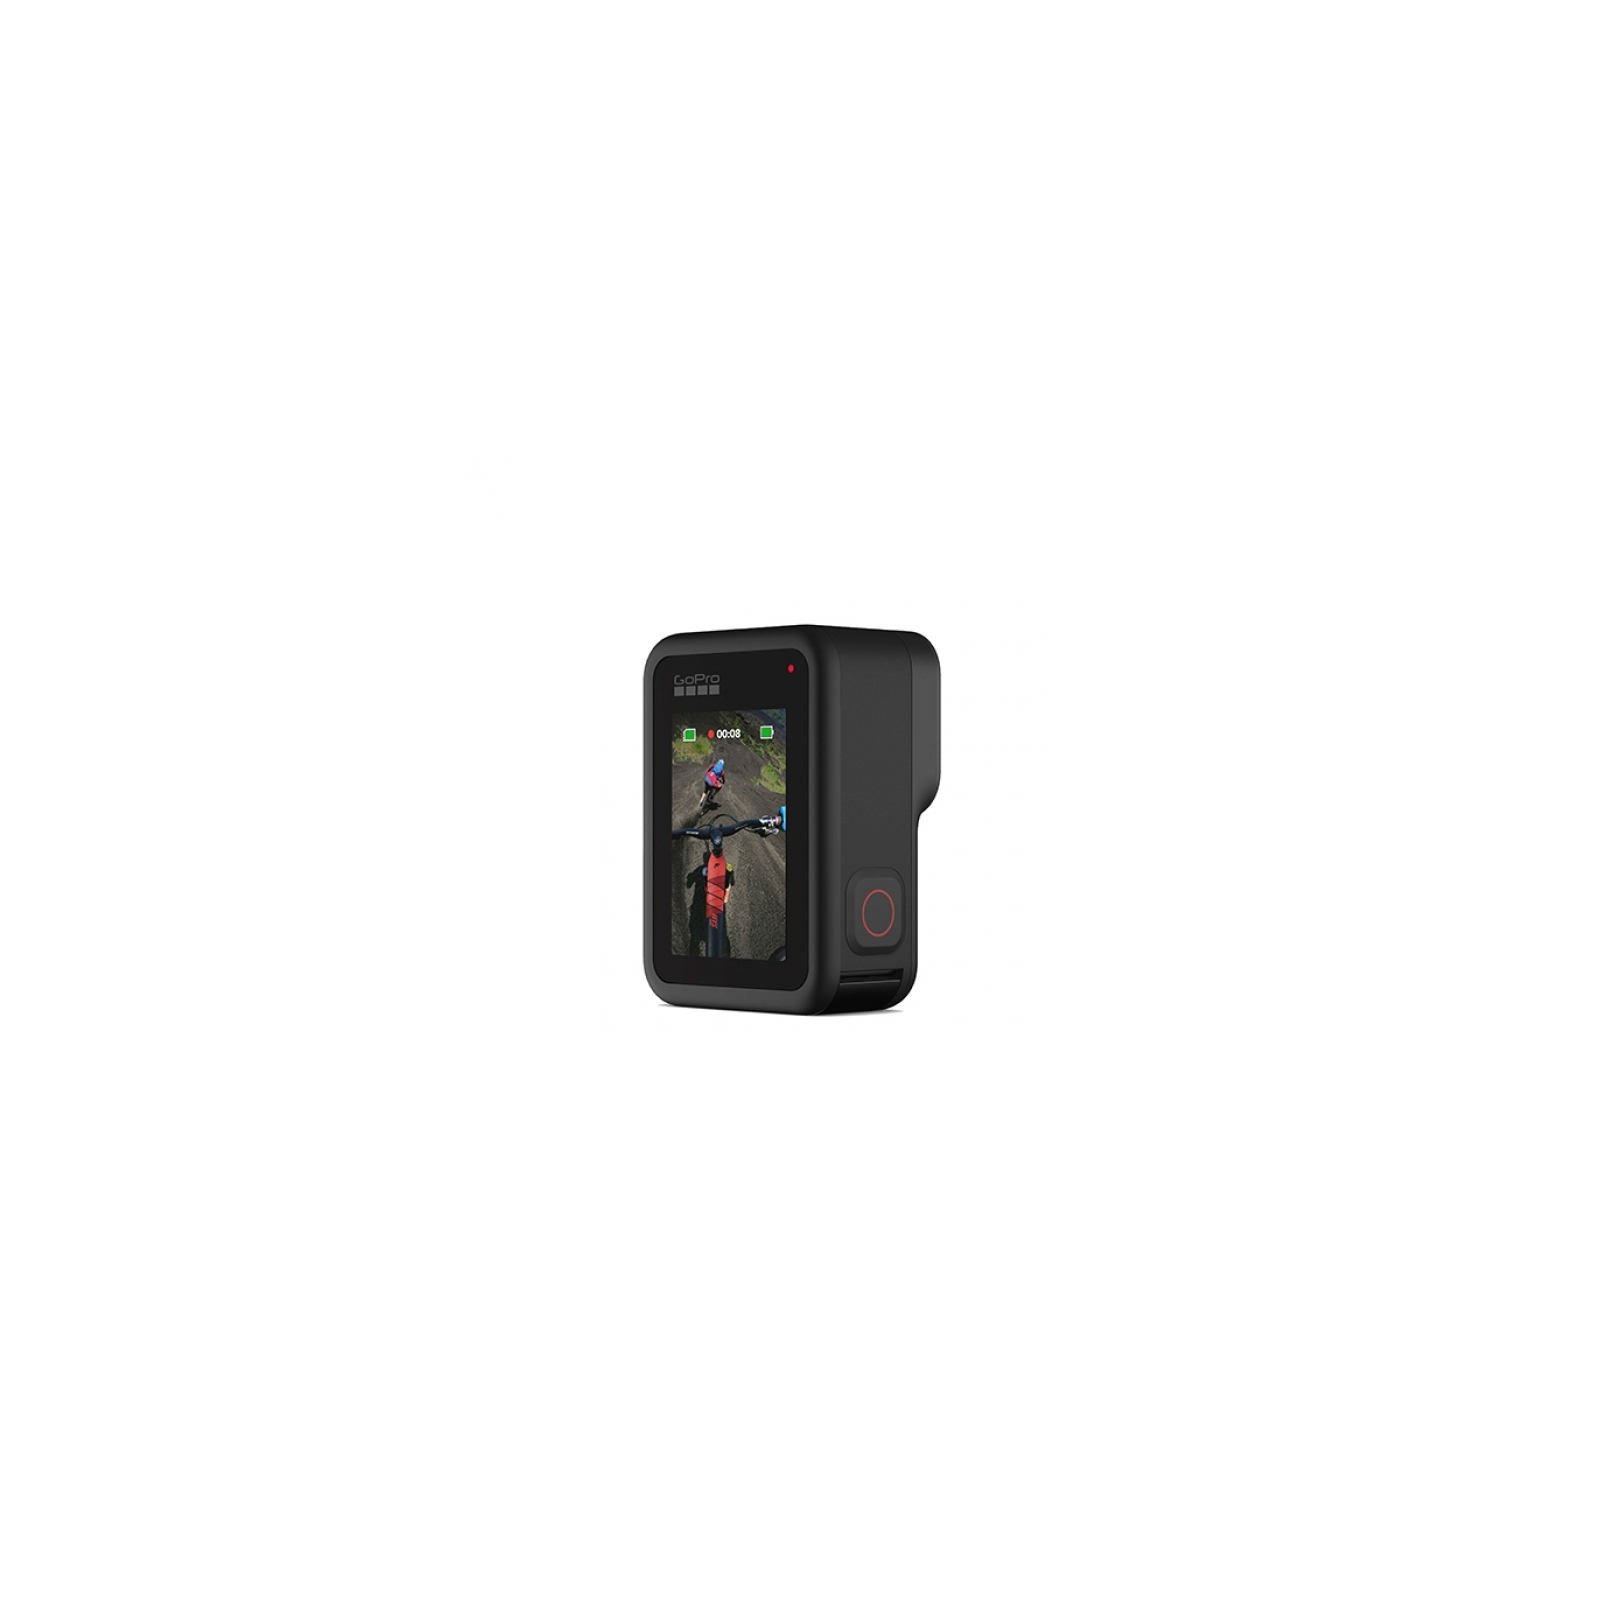 Екшн-камера GoPro Hero 8 Black with SD card (CHDSB-801) ціни в Києві та